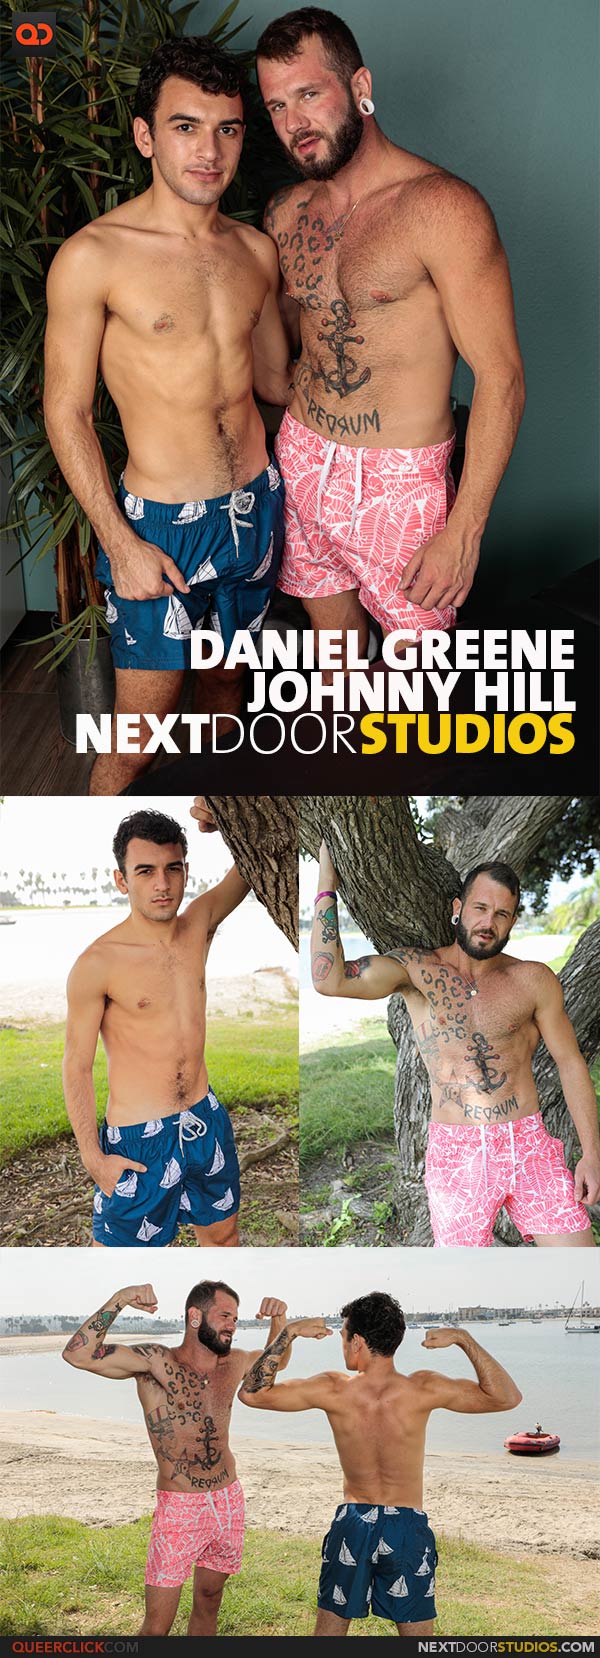 NextDoorStudios: Johnny Hill and Daniel Greene